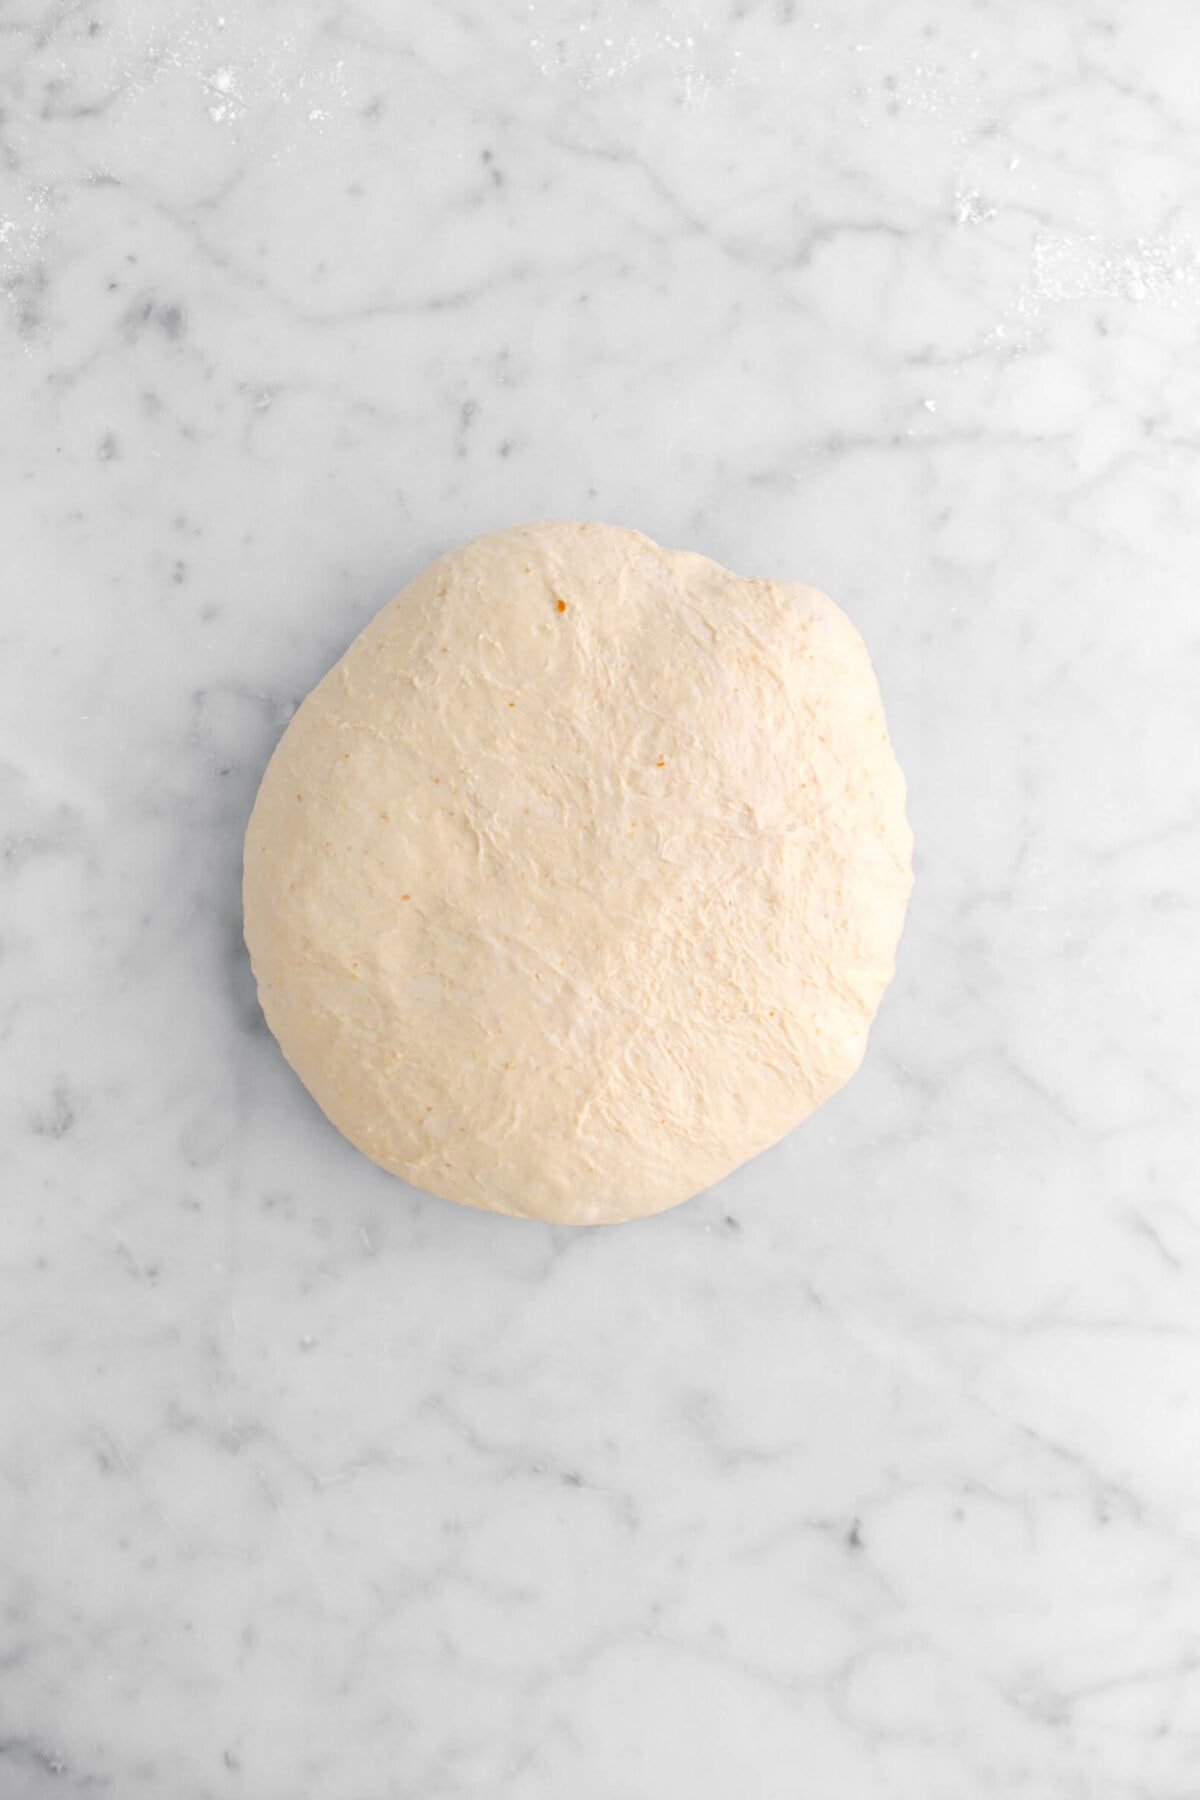 dough boule on marble surface.